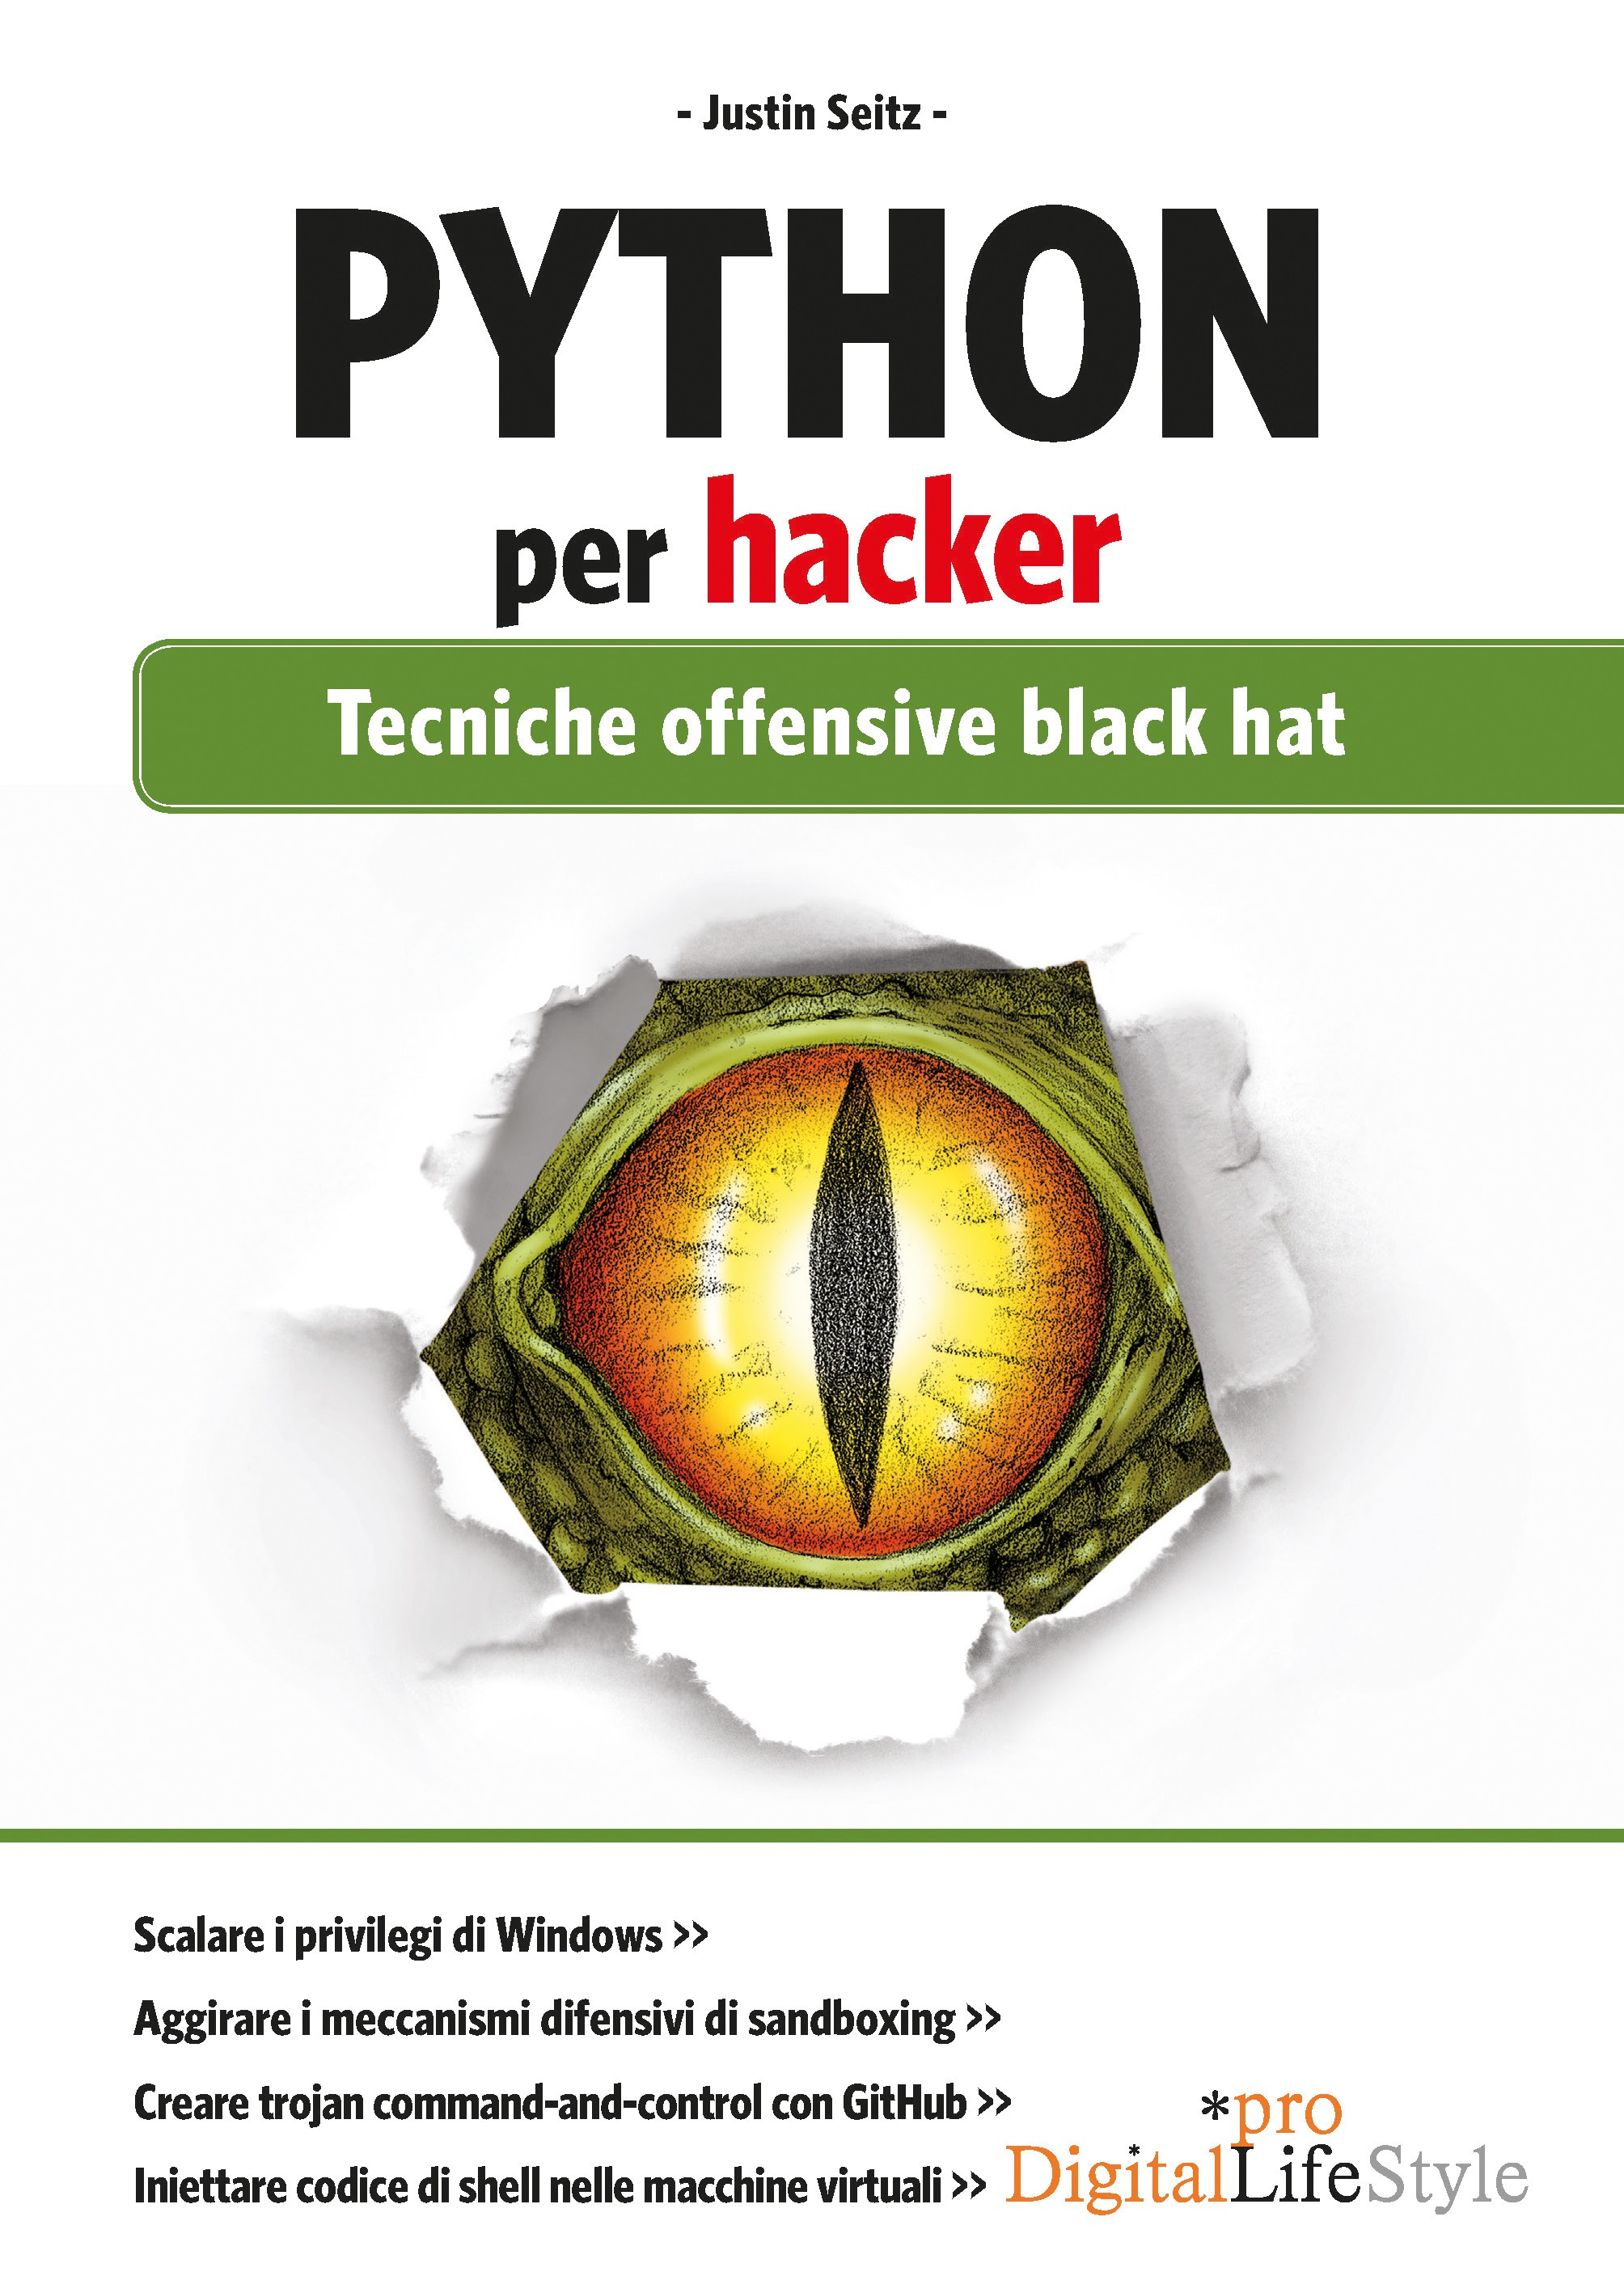 Python per hacker - Librerie.coop